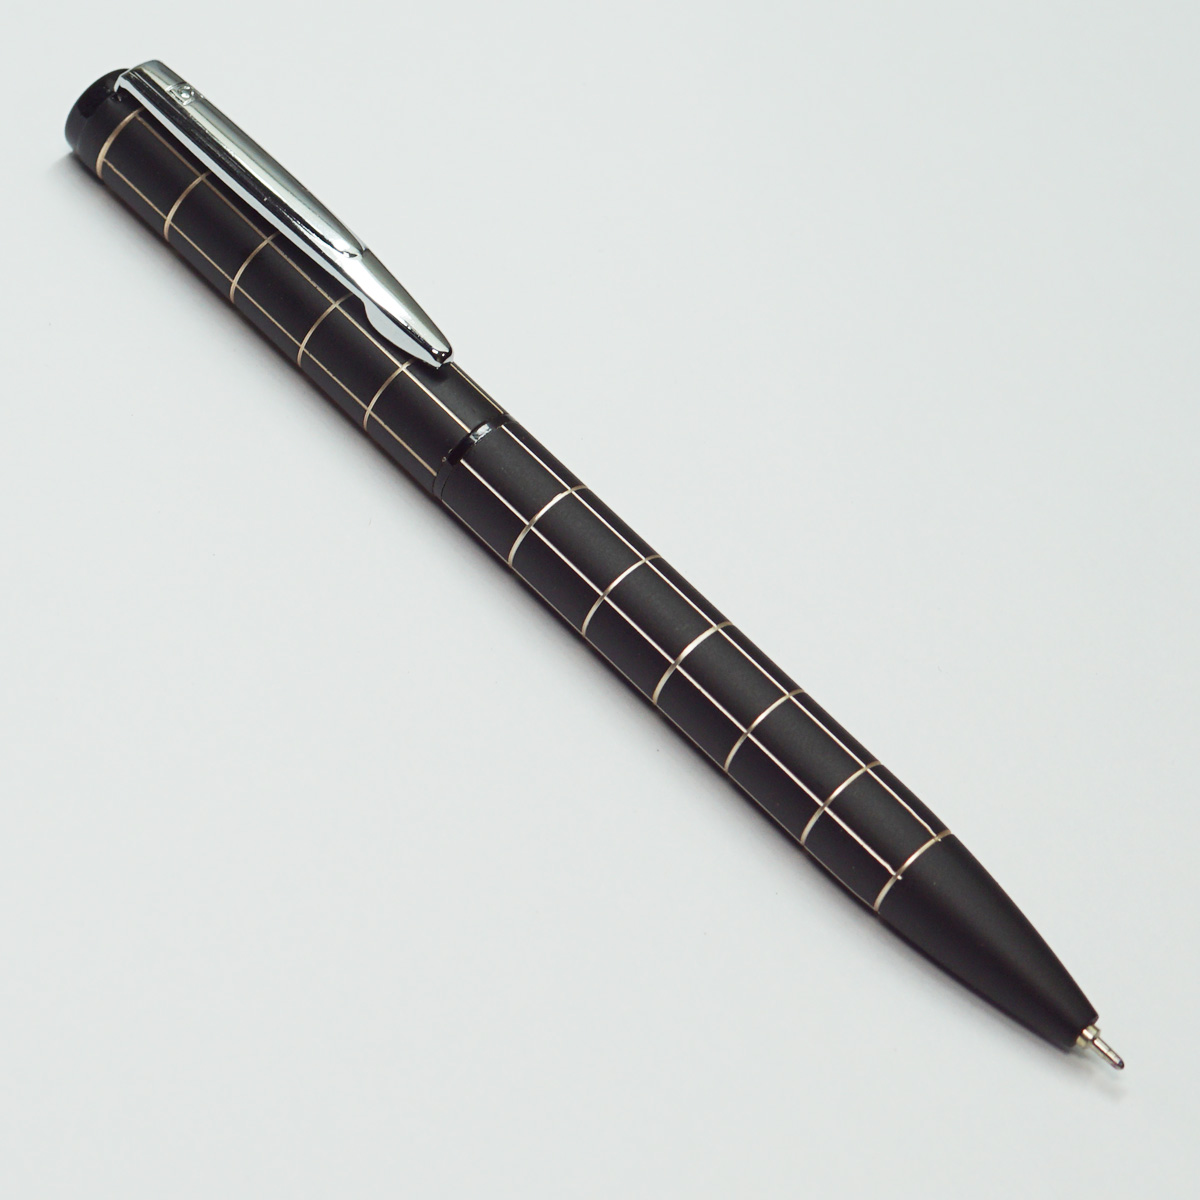 Cello Chequers Select Black Color Gold Strip Checked Design Body With Silver Clip Fine Tip Twist Type Ball Pen SKU 22609